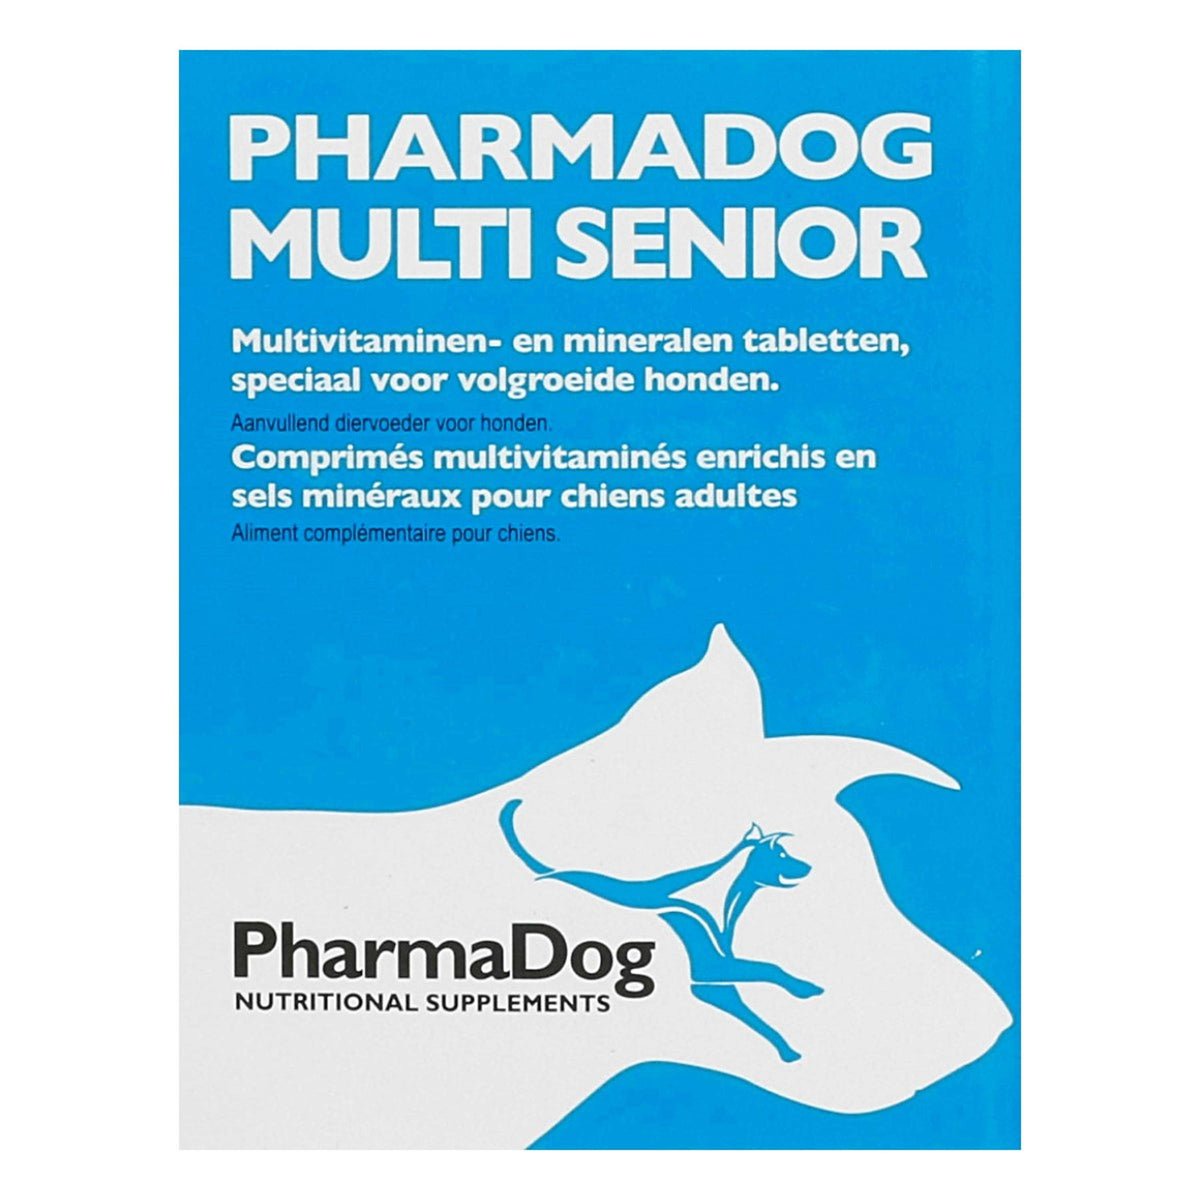 PharmaDog Multi Senior